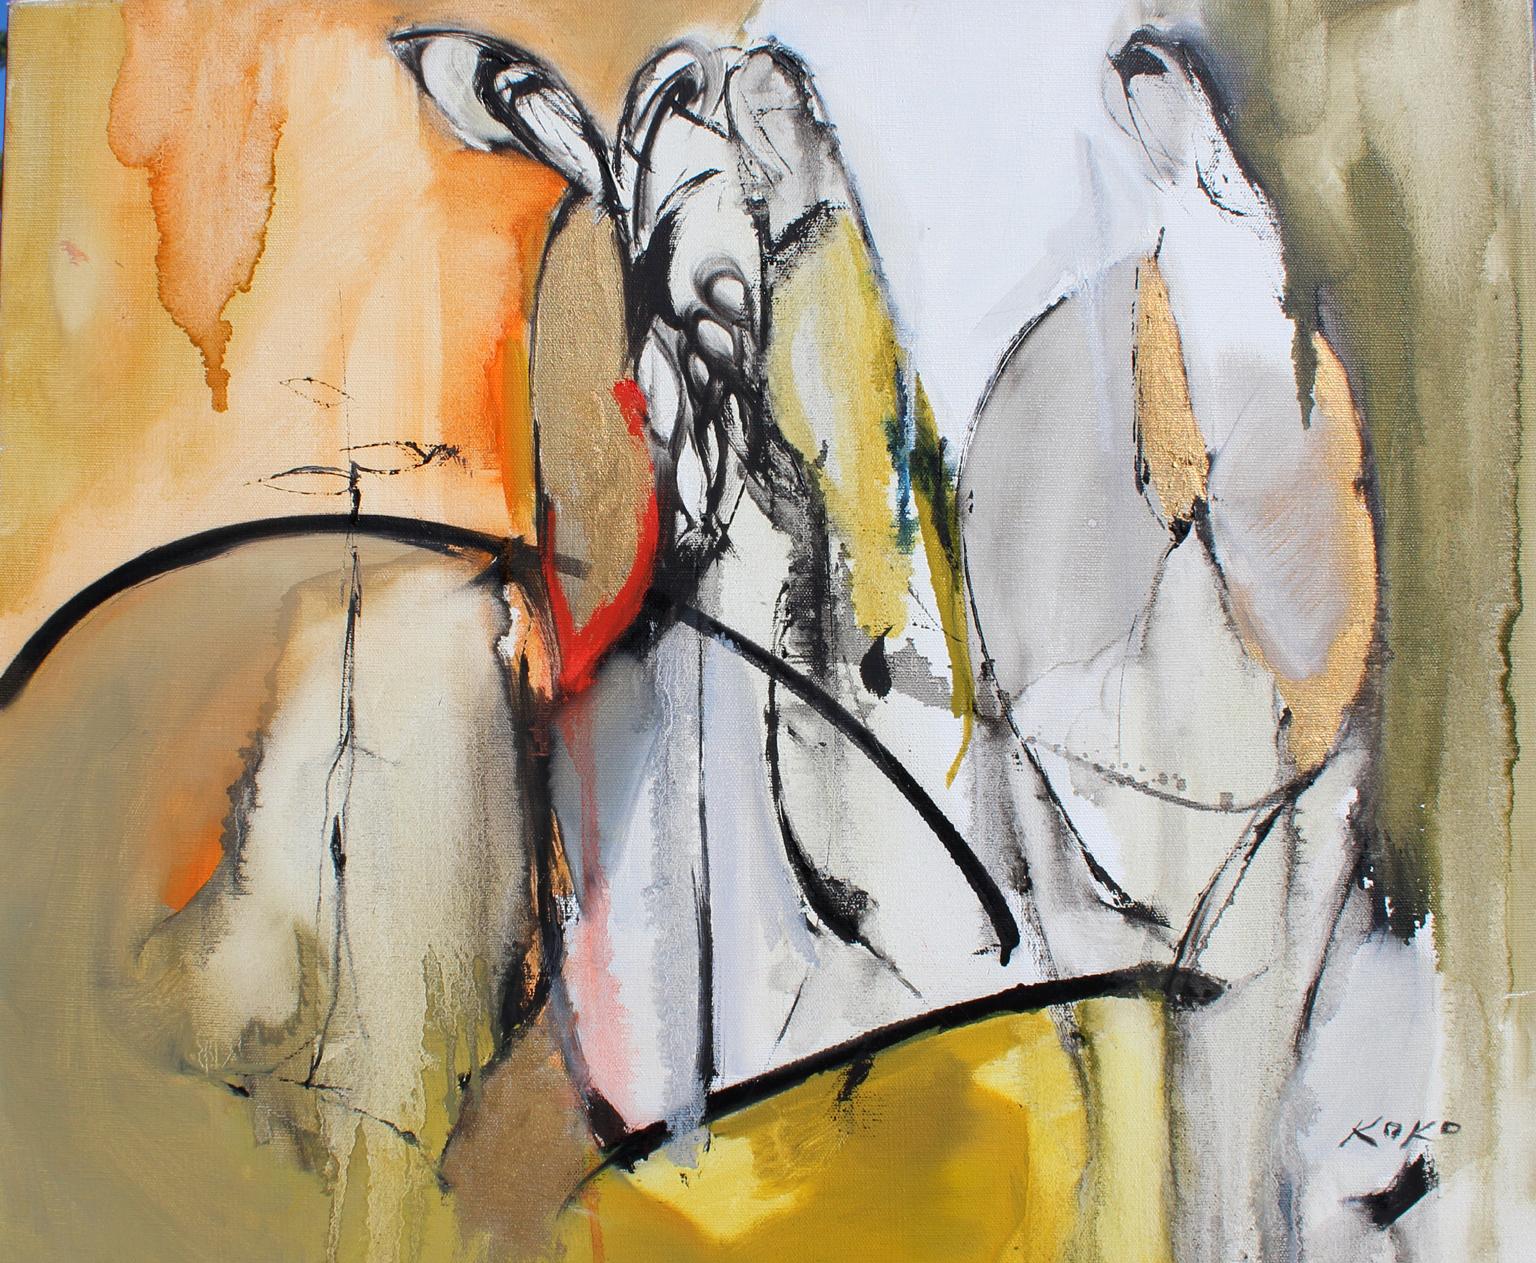 KOKO HOVAGUIMIAN Abstract Painting – Barroco Study, Musikerauswahl, 20x24 Zoll, Öl auf Leinwand. Signiert unten rechts